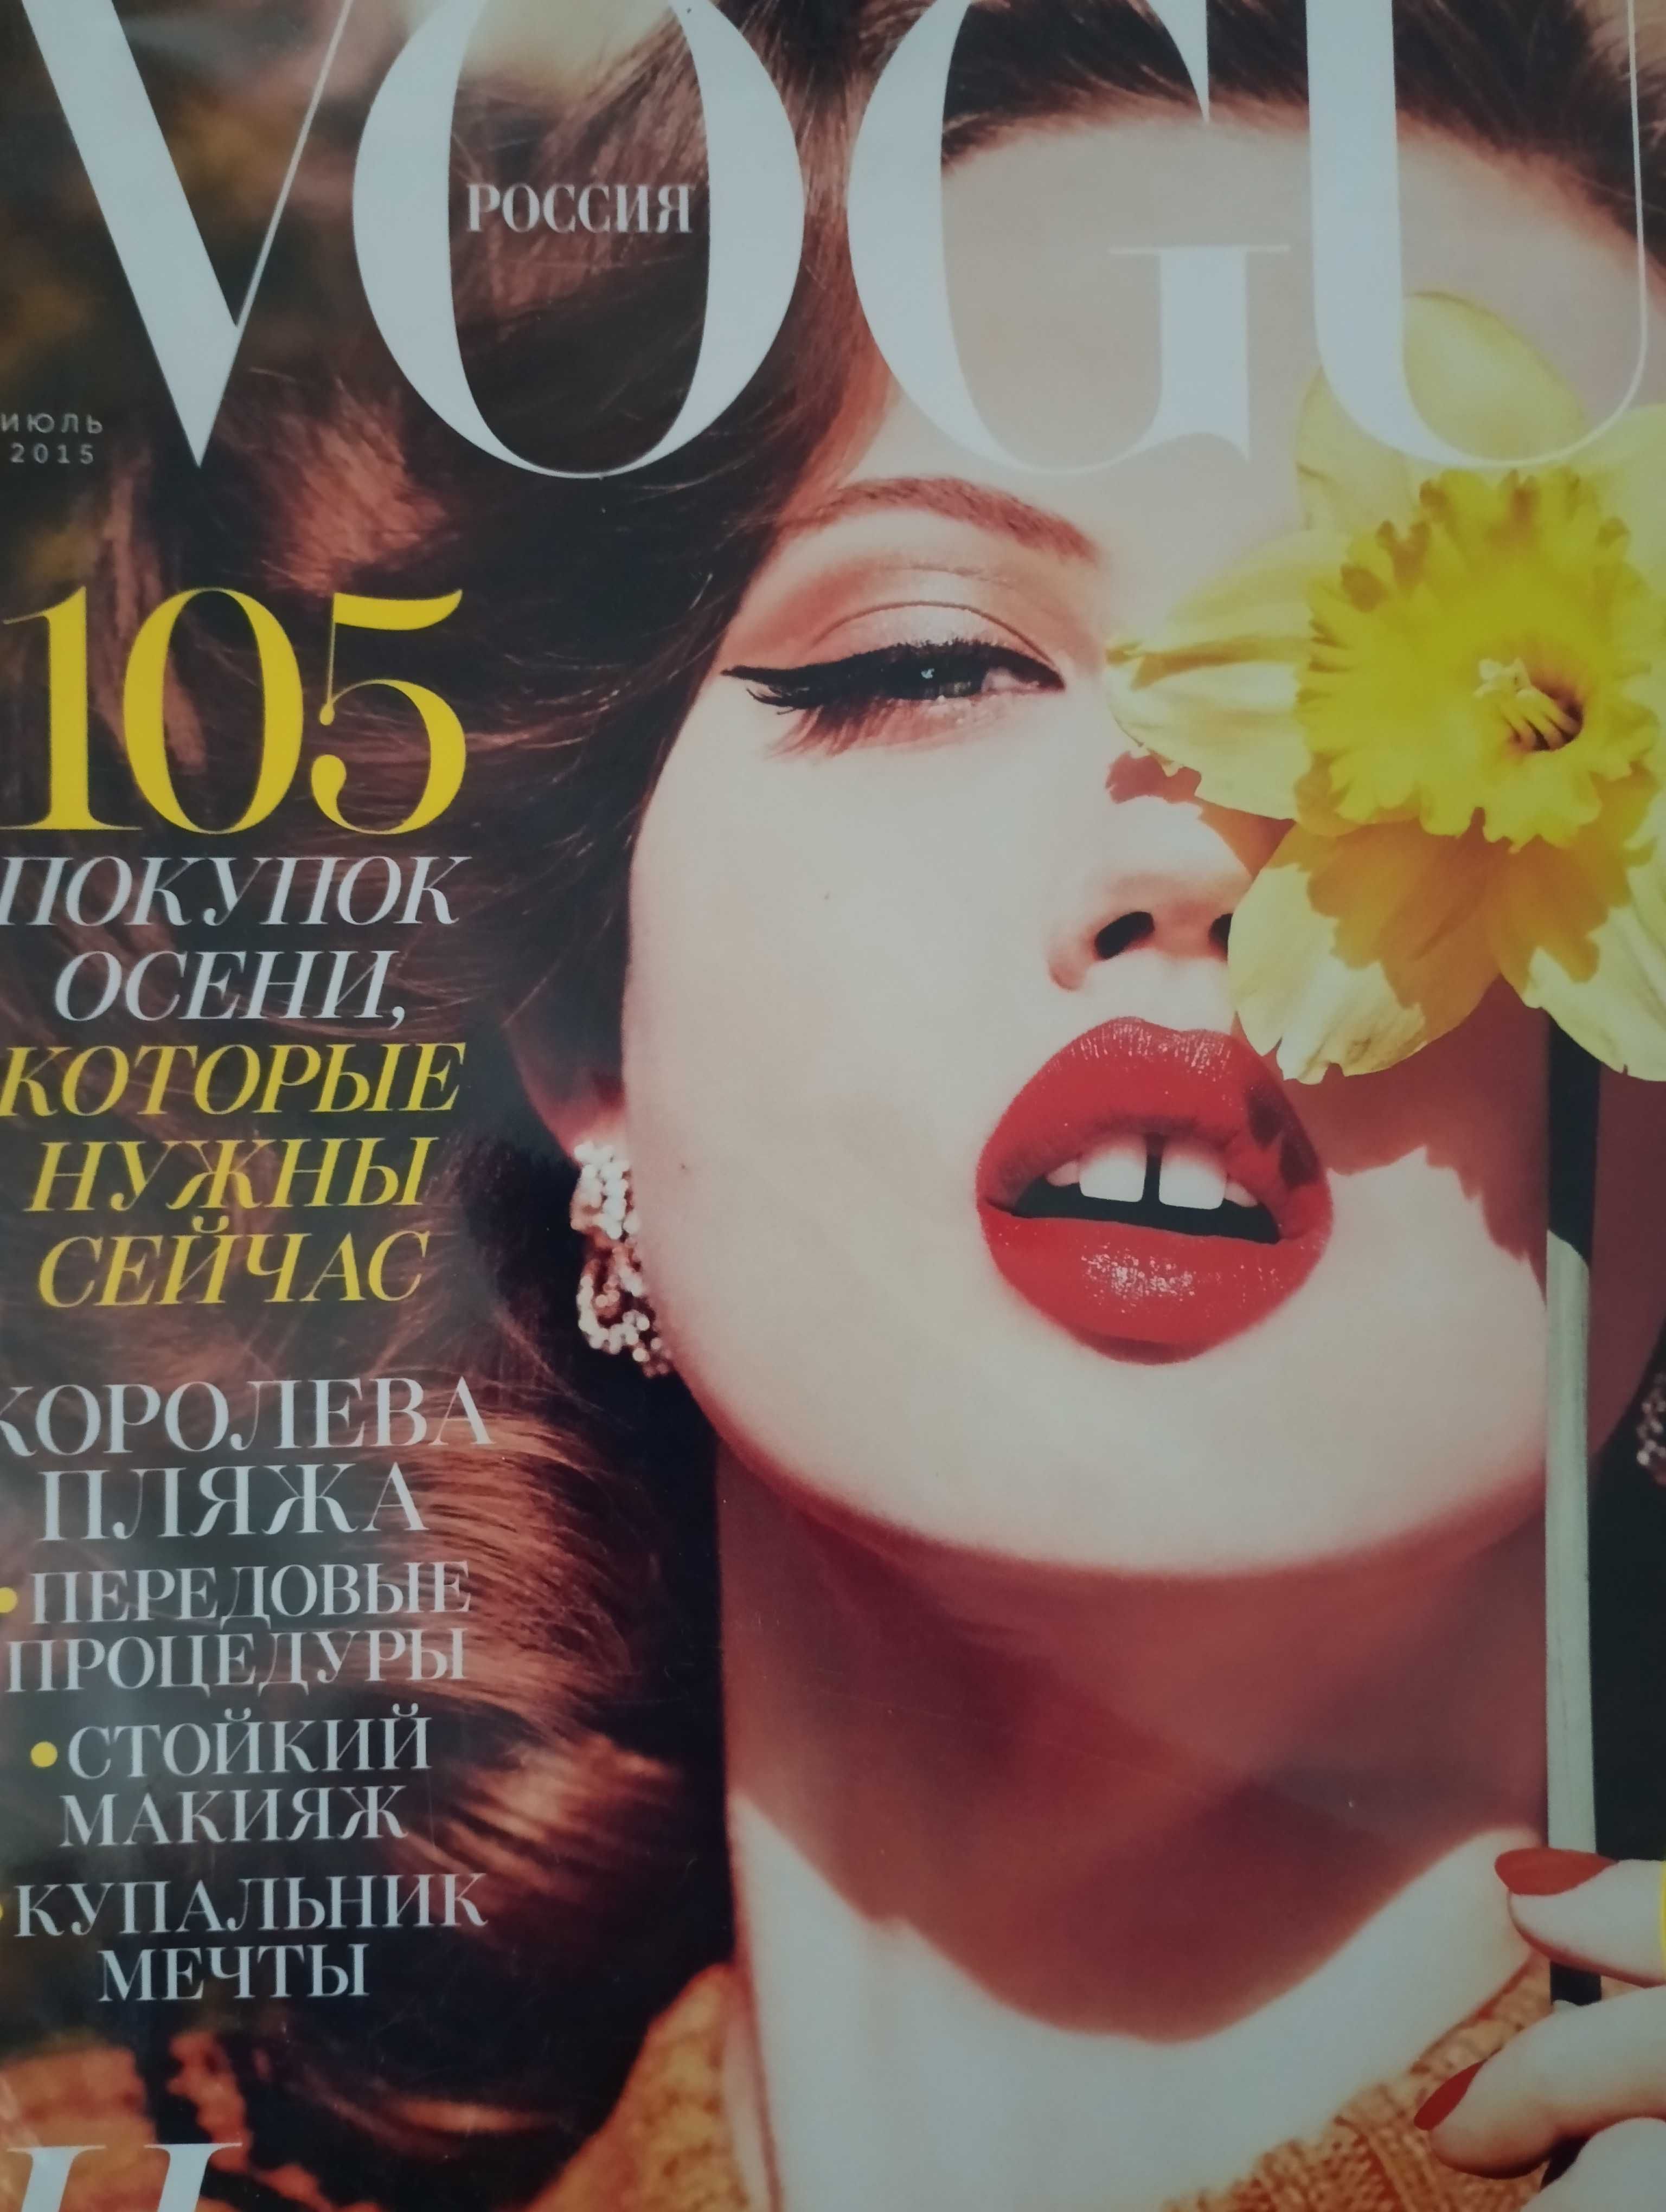 Журнал Vogue 2013-2016 роки в асортименті.